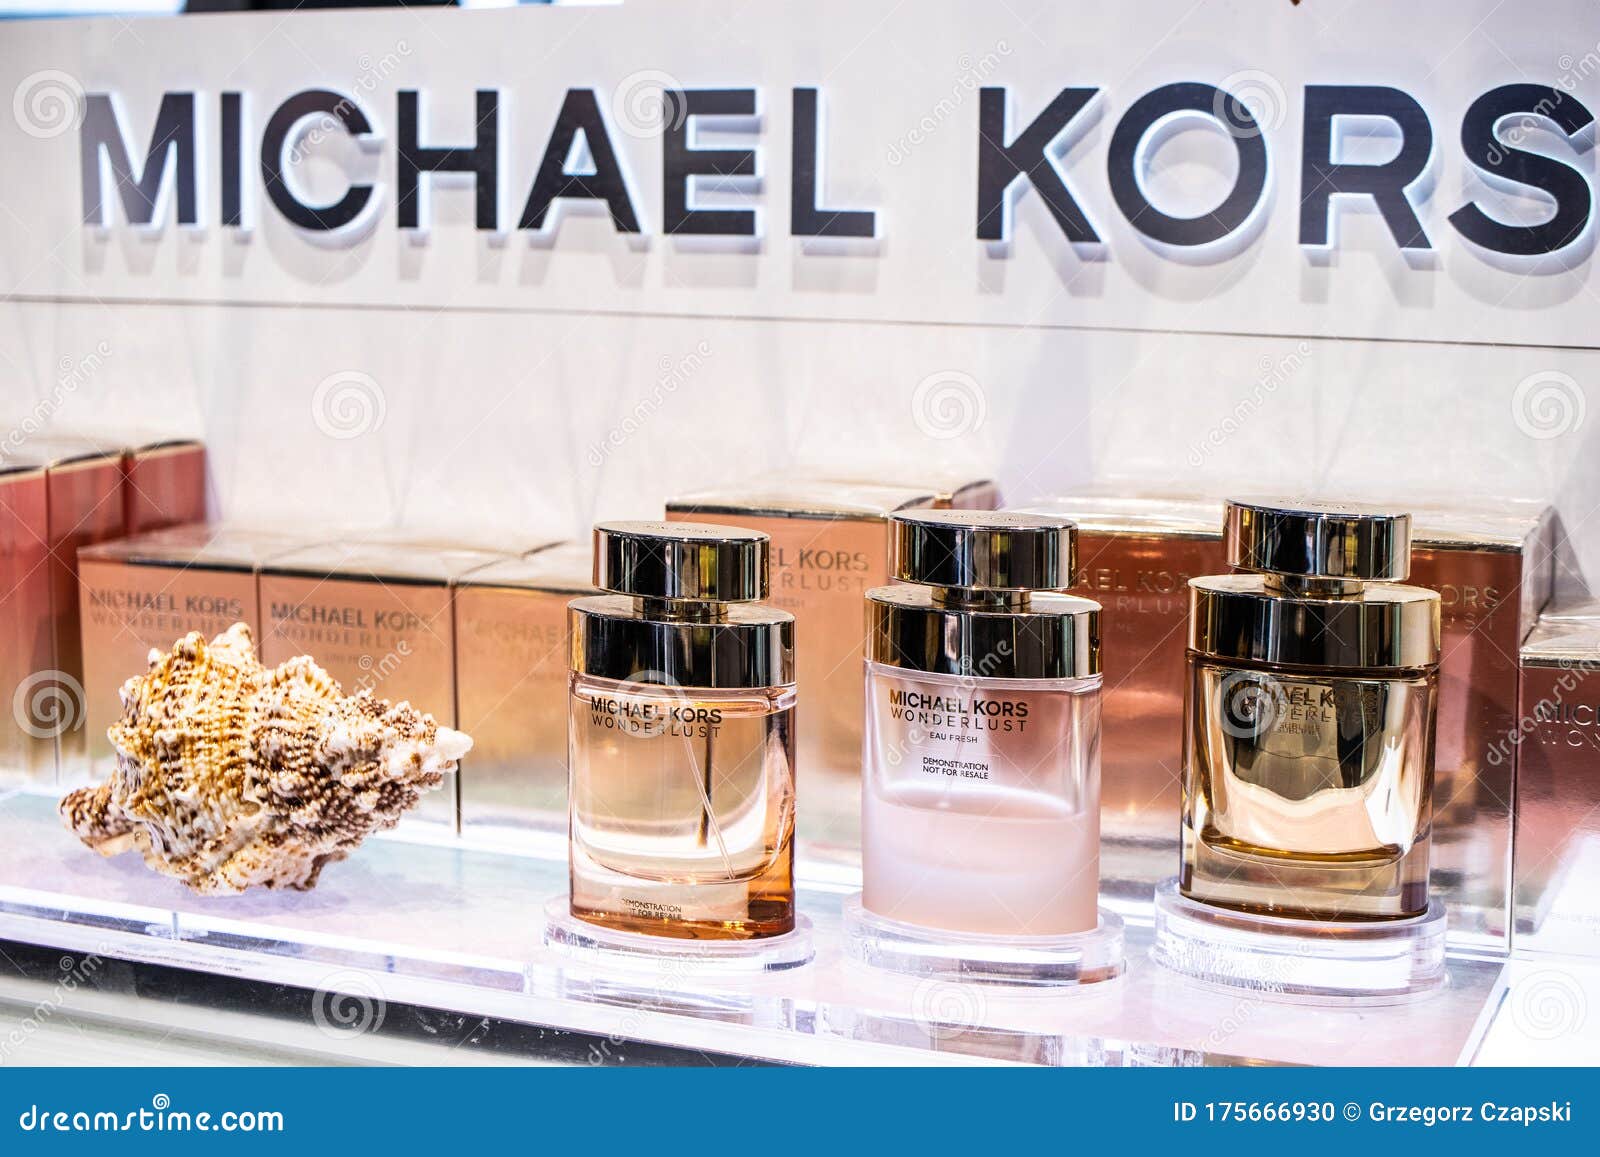 michael kors perfume shop